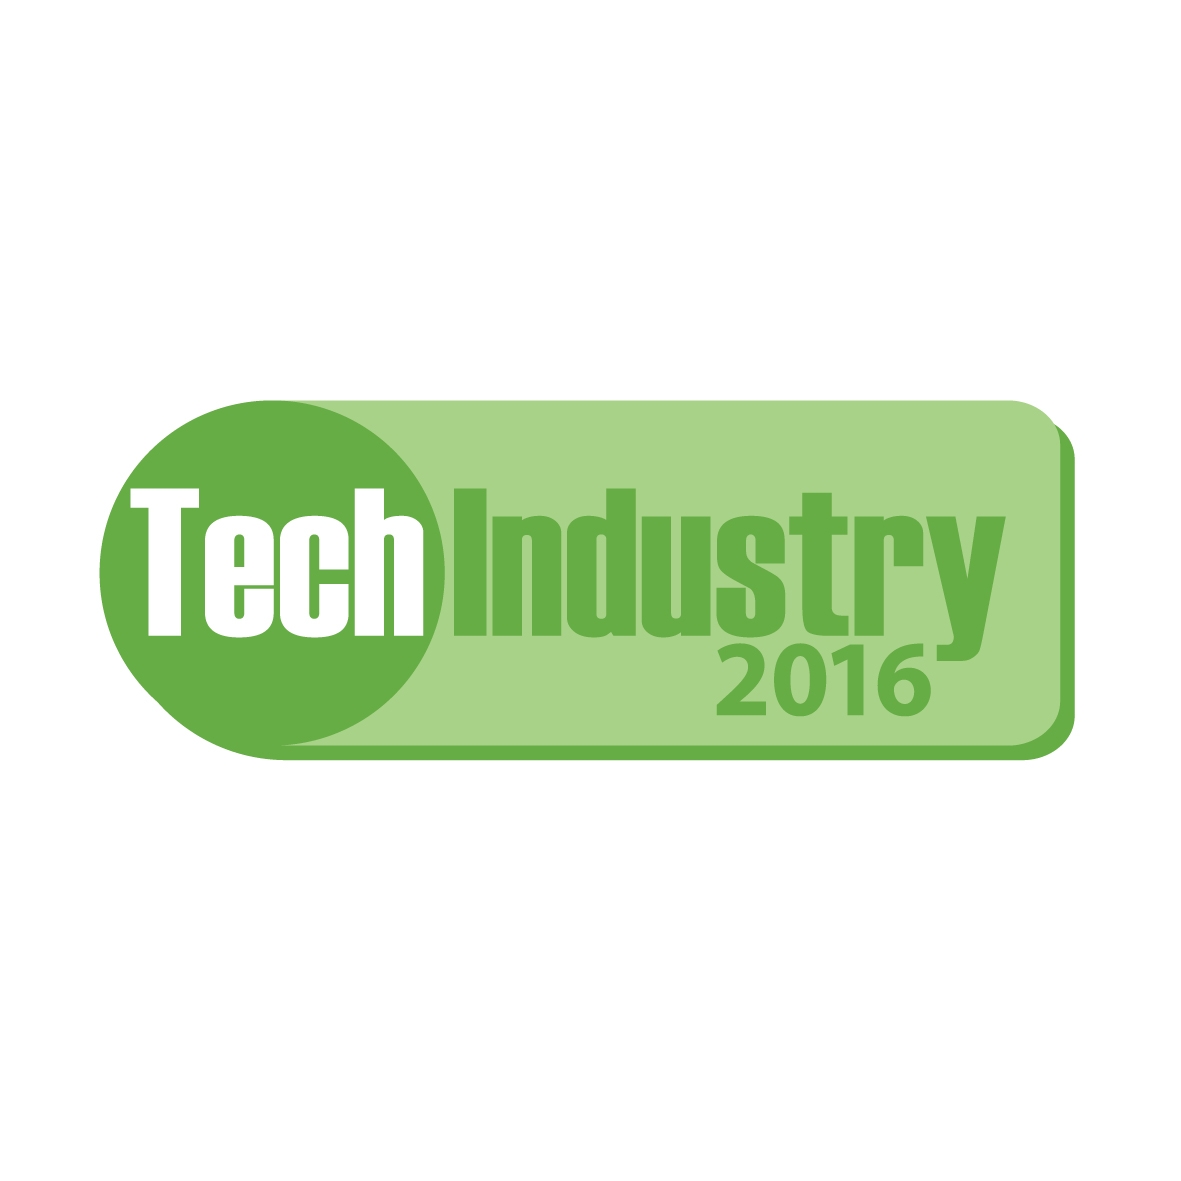 Kontaktbirža Tech Industry 2016 ietvaros